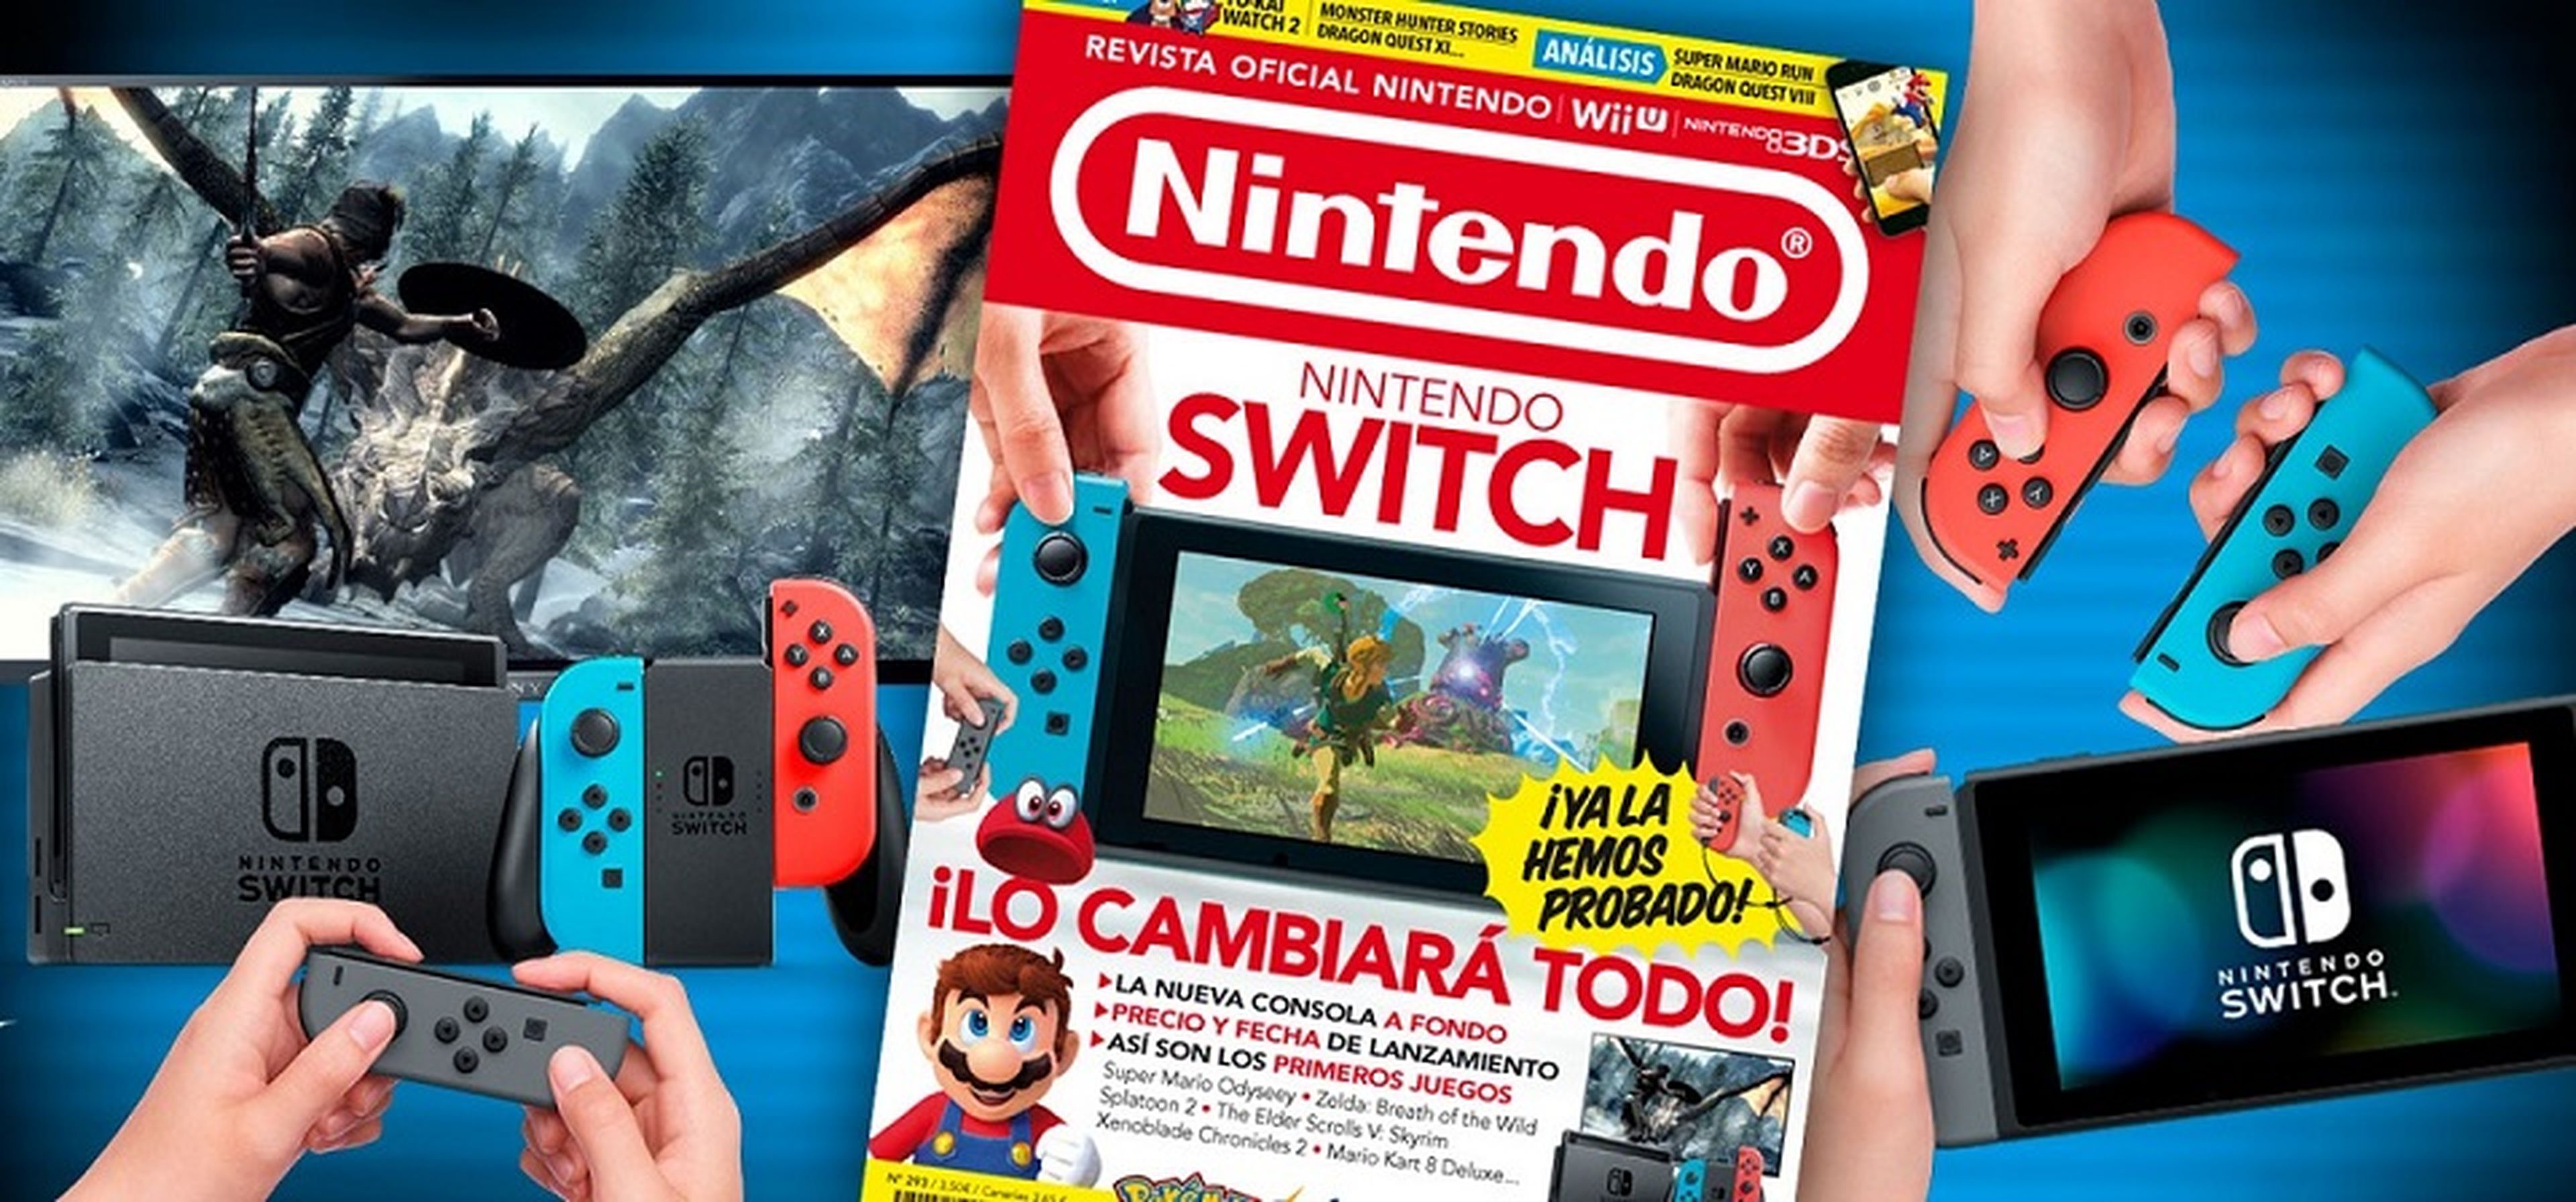 Nintendo Switch es portada de la Revista Oficial Nintendo Nº 293